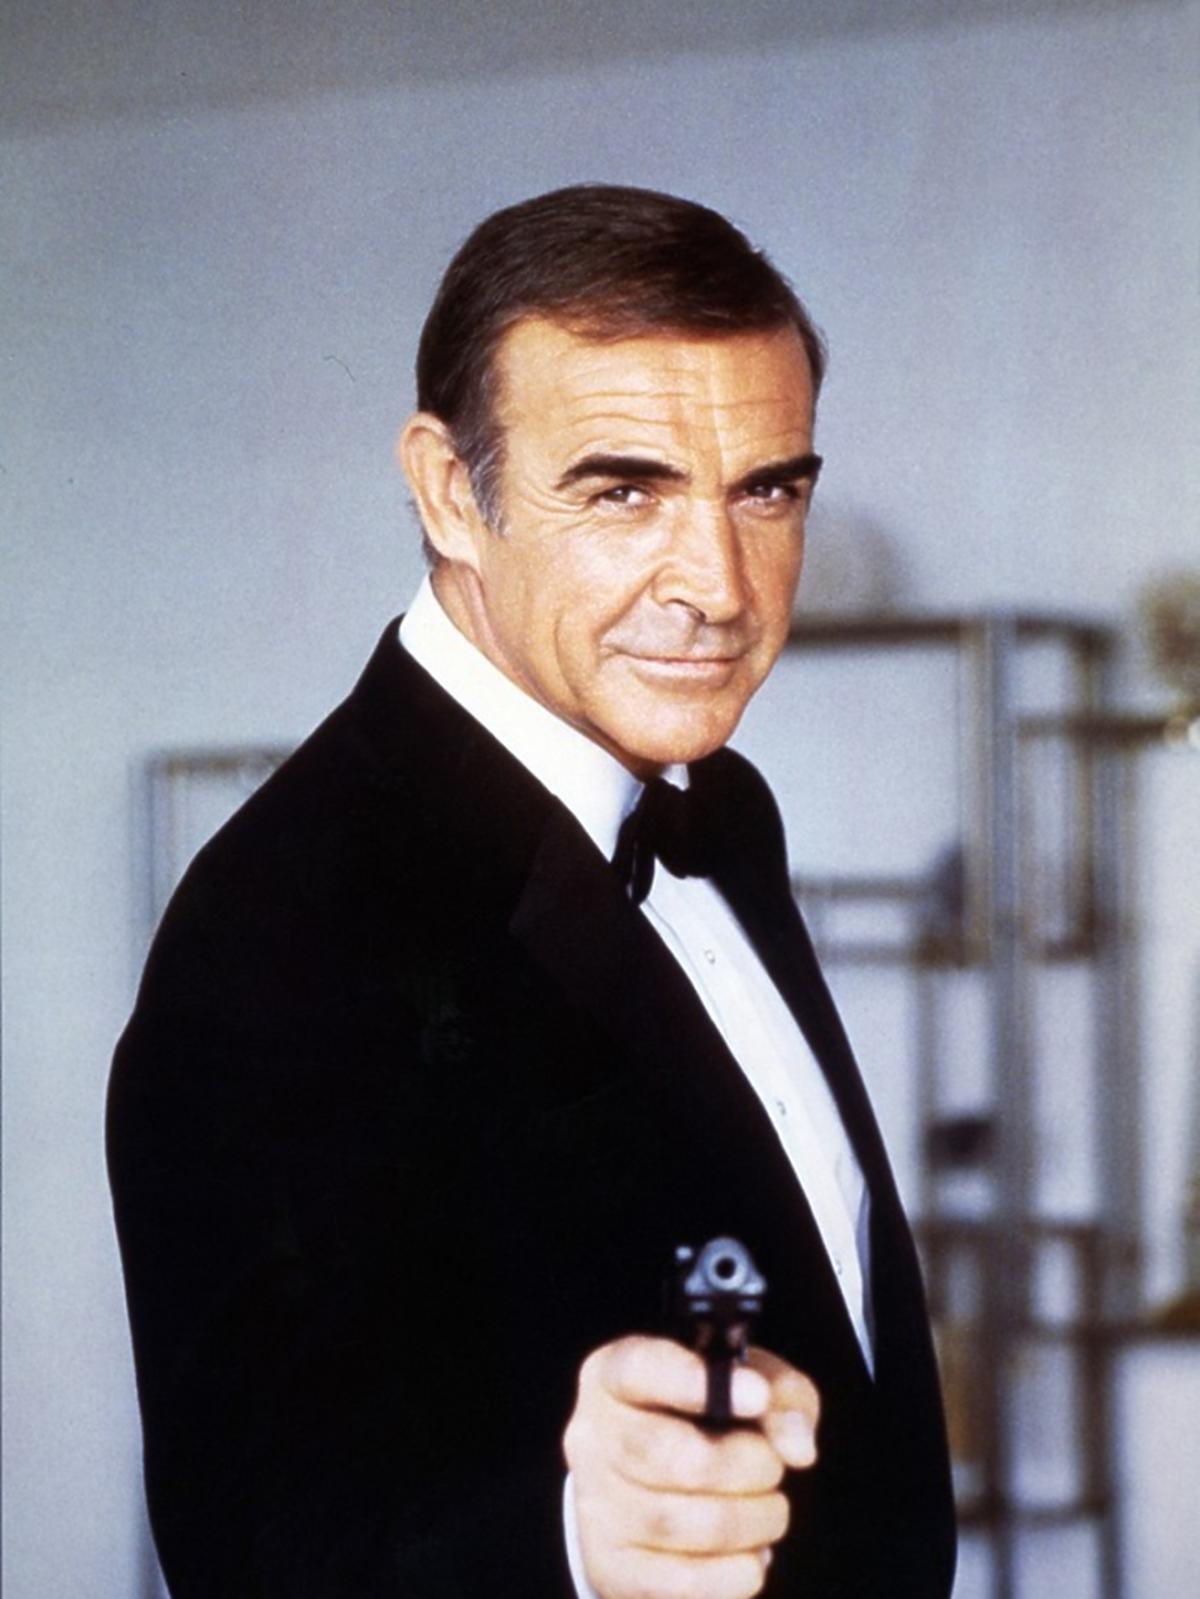 Sean Connery celuje z pistoletu, w czarnej muszce